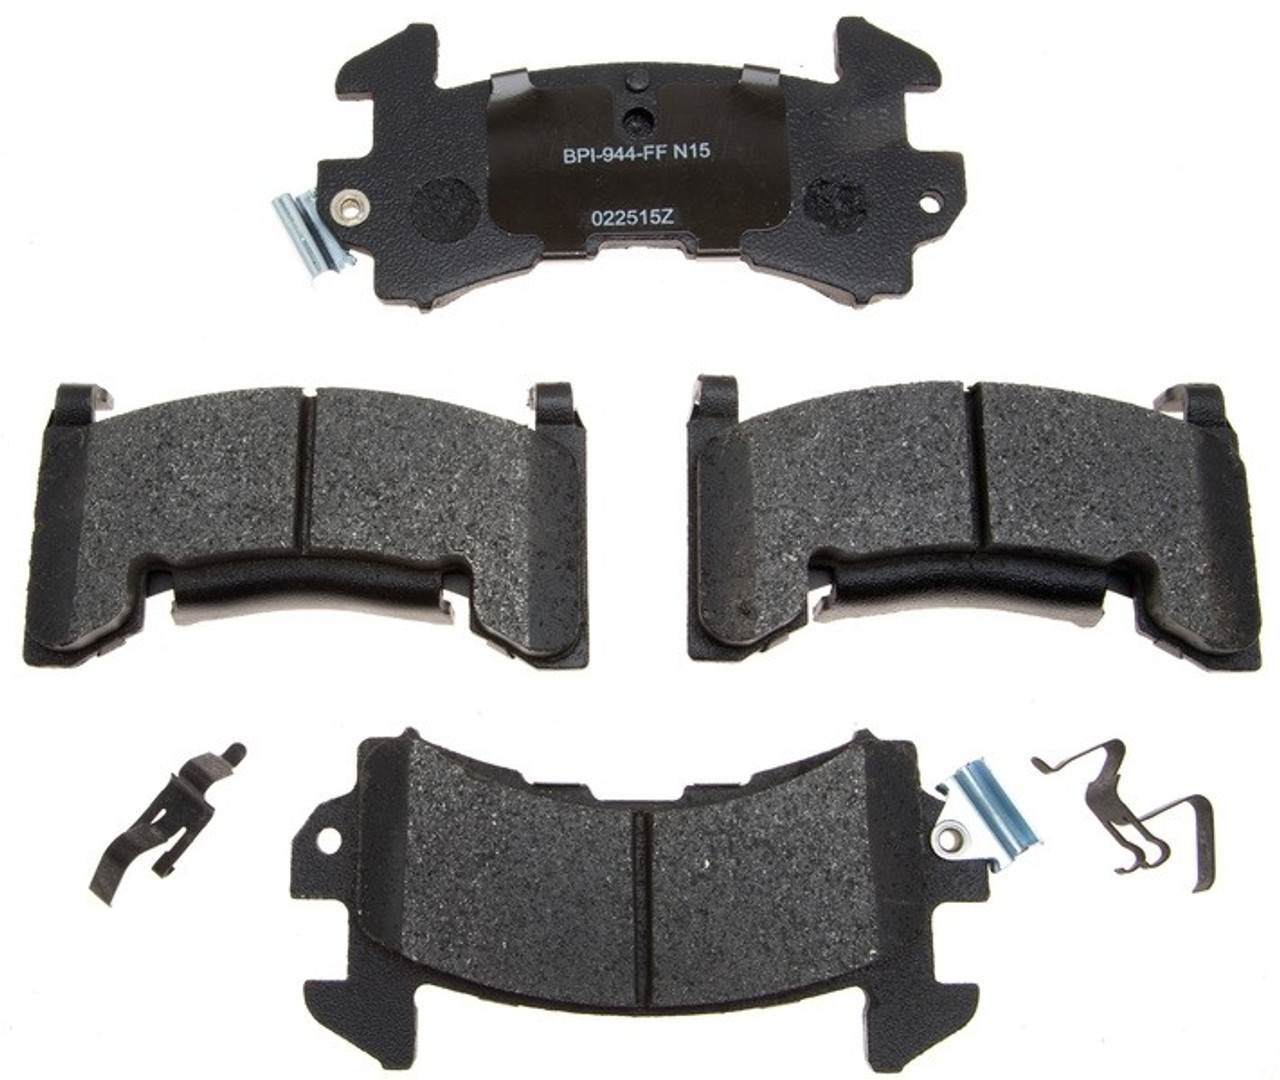 ACDelco Professional semi-metallic brake pads